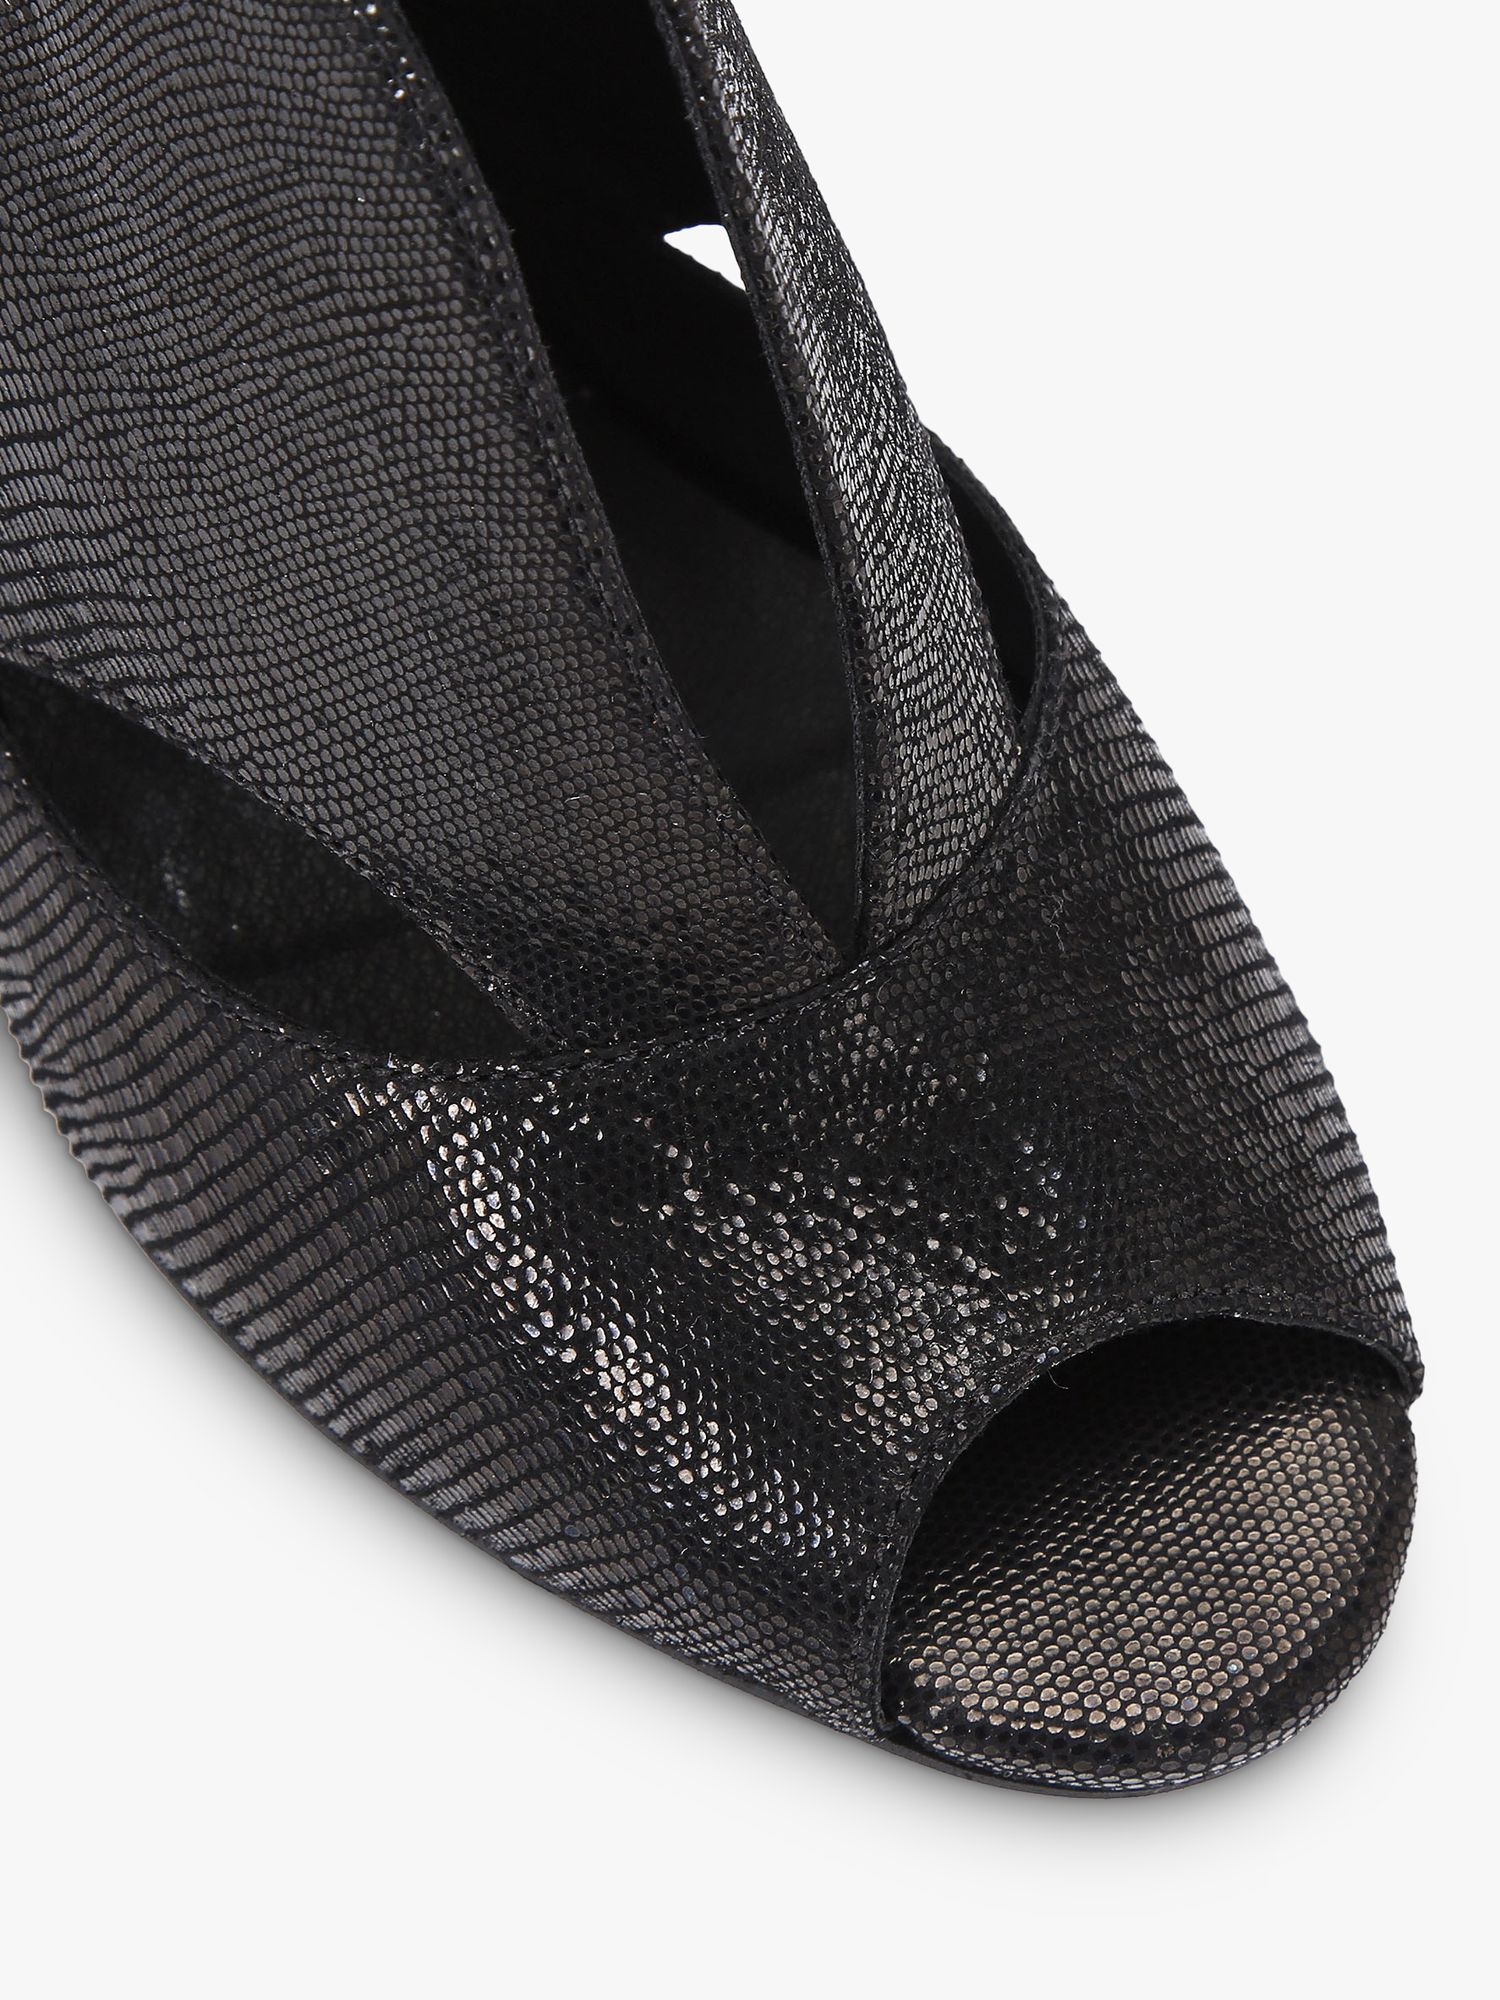 Carvela Arabella Snakeskin Effect Leather Open Toe Court Shoes, Black, 3